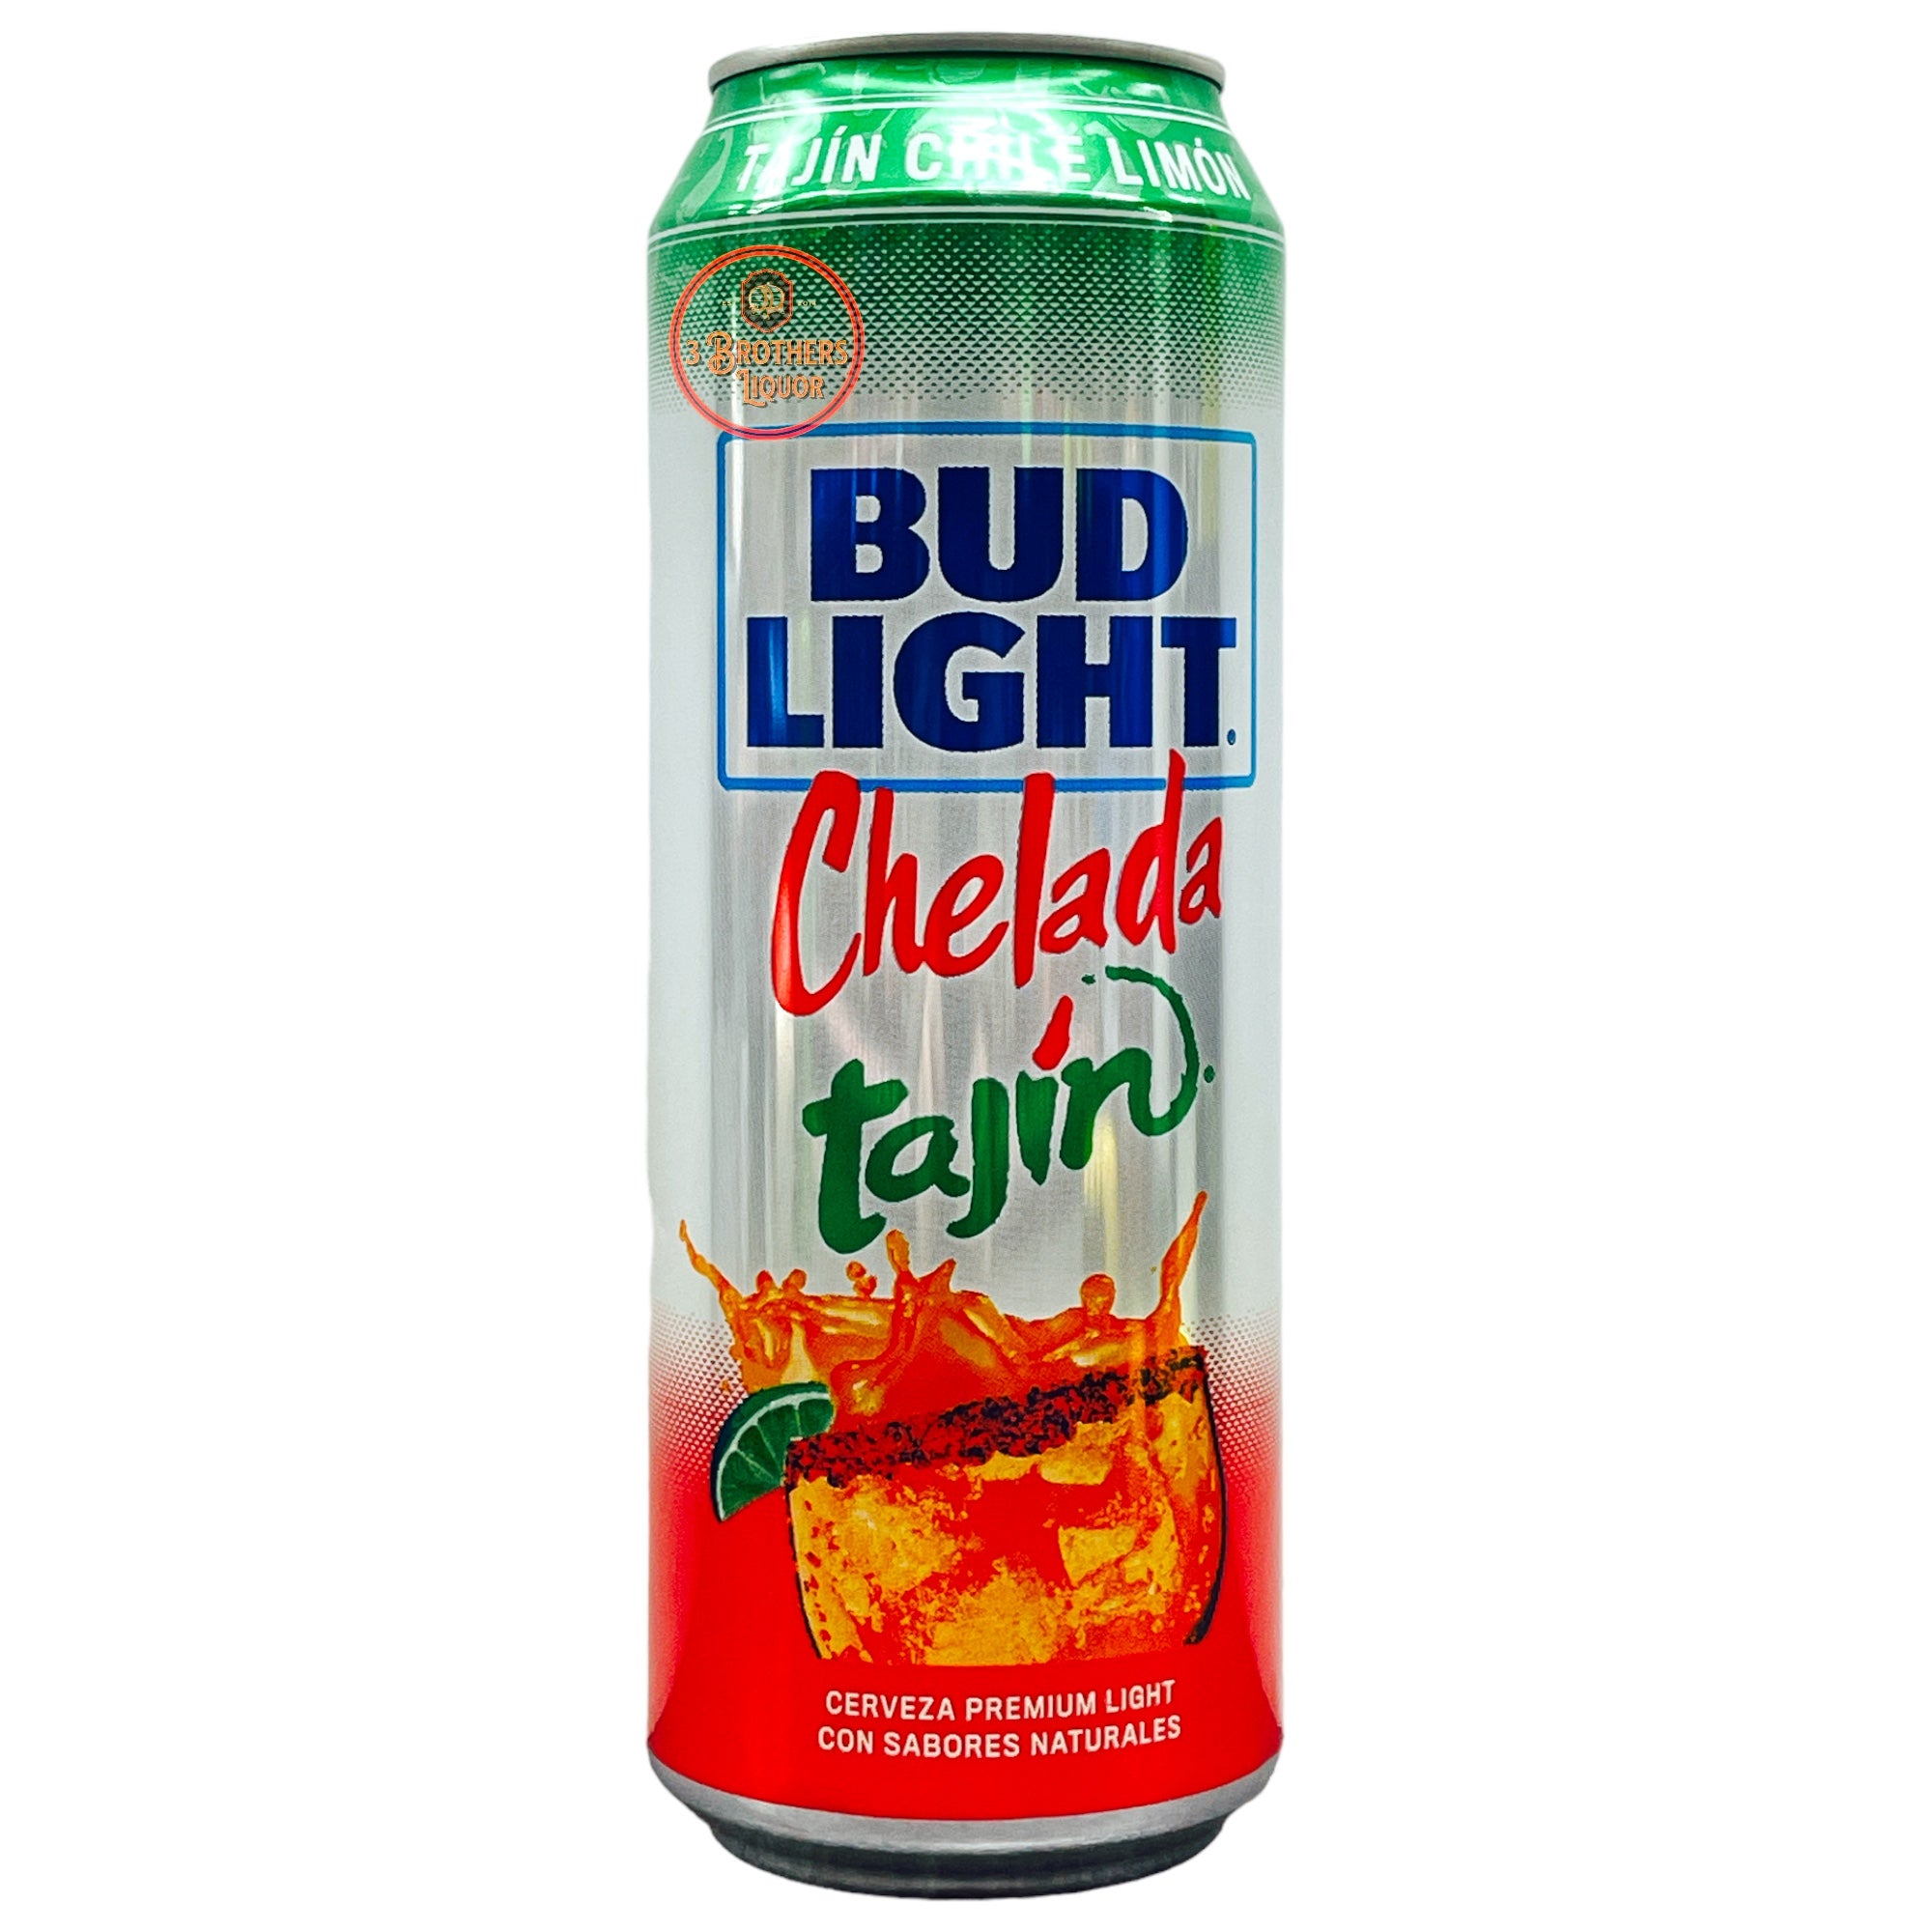 Bud Light Tajin Chelada Malt Beverage Beer